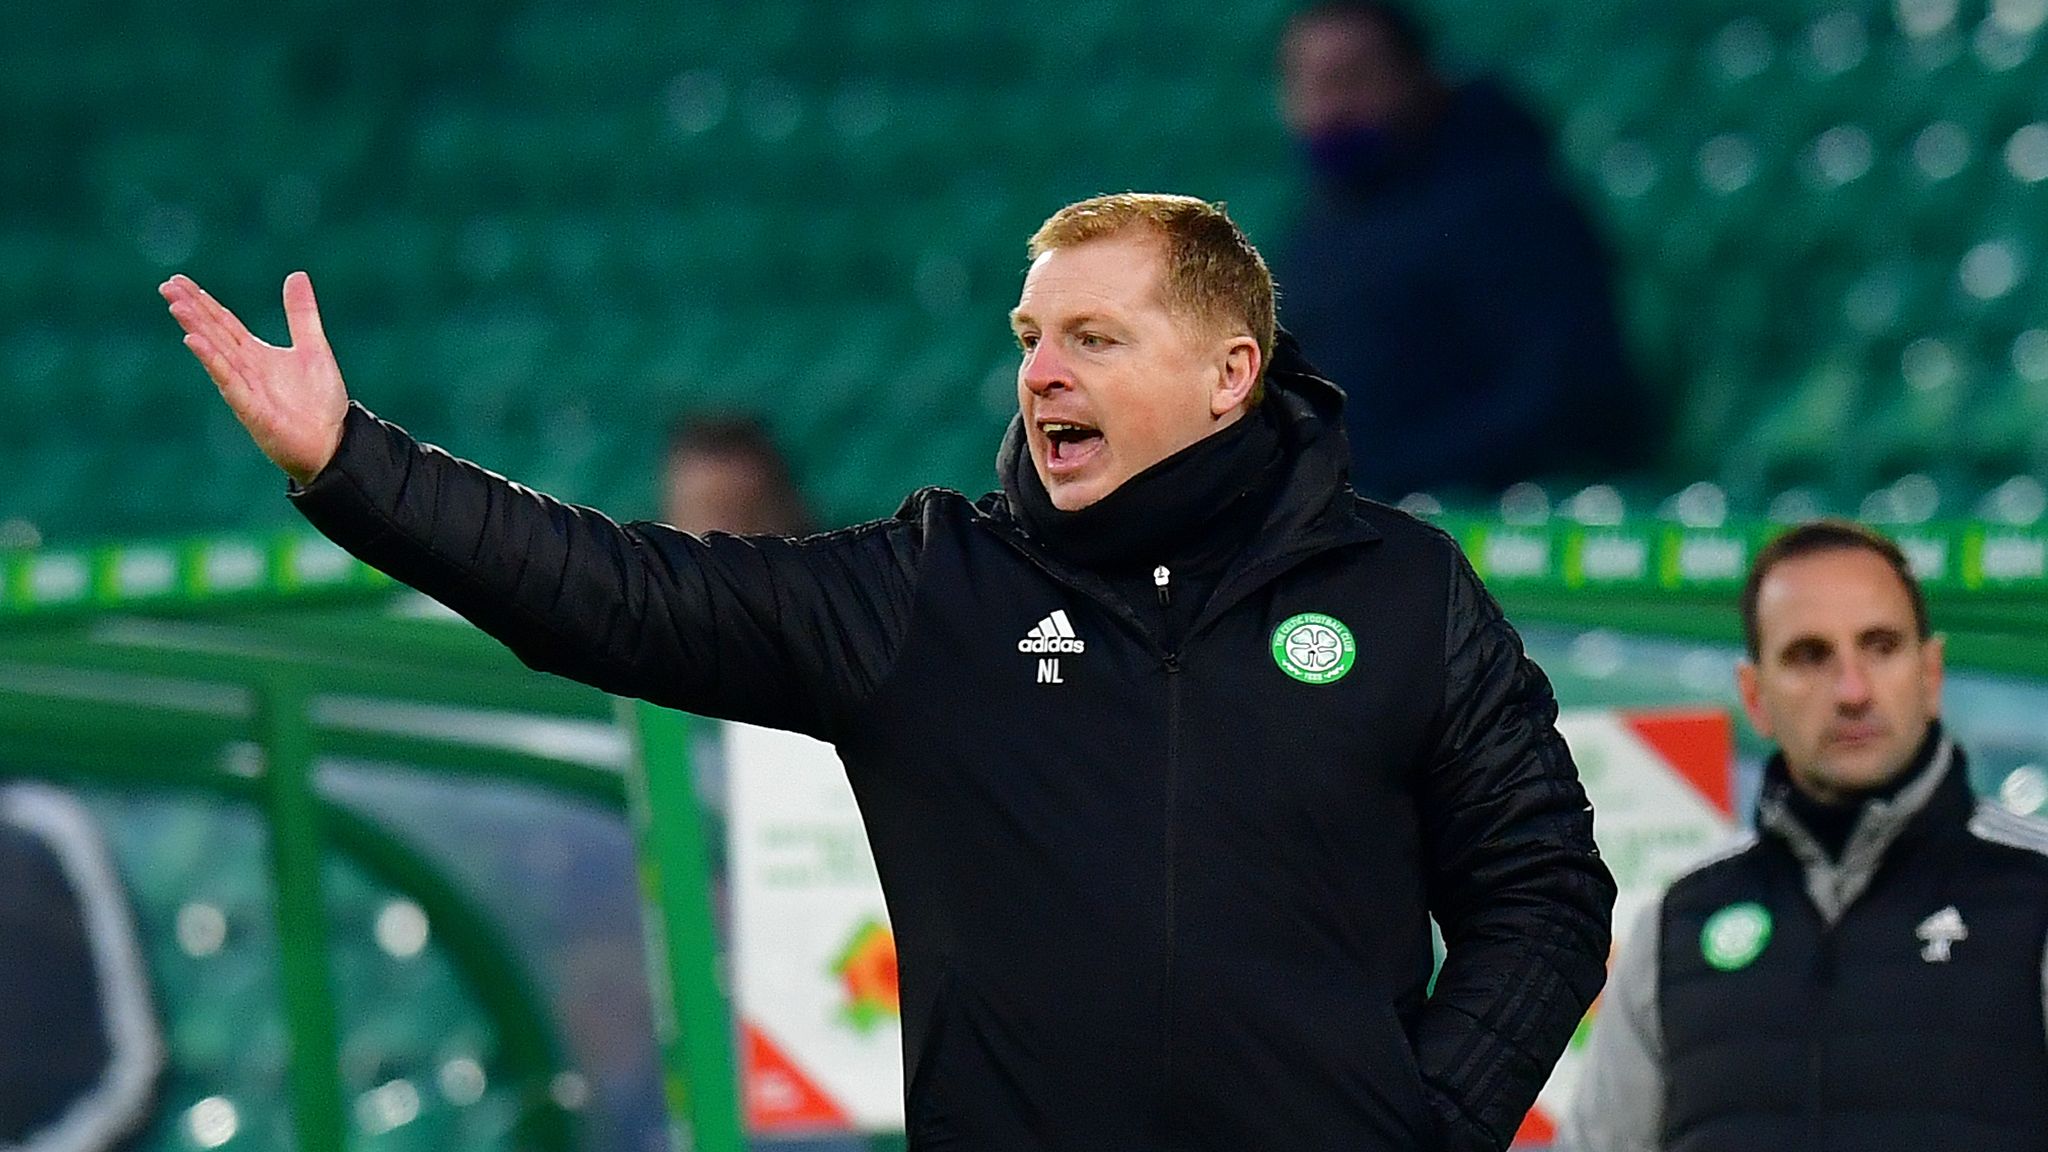 Neil Lennon Celtic Back Manager After Positive Talks Football News Sky Sports